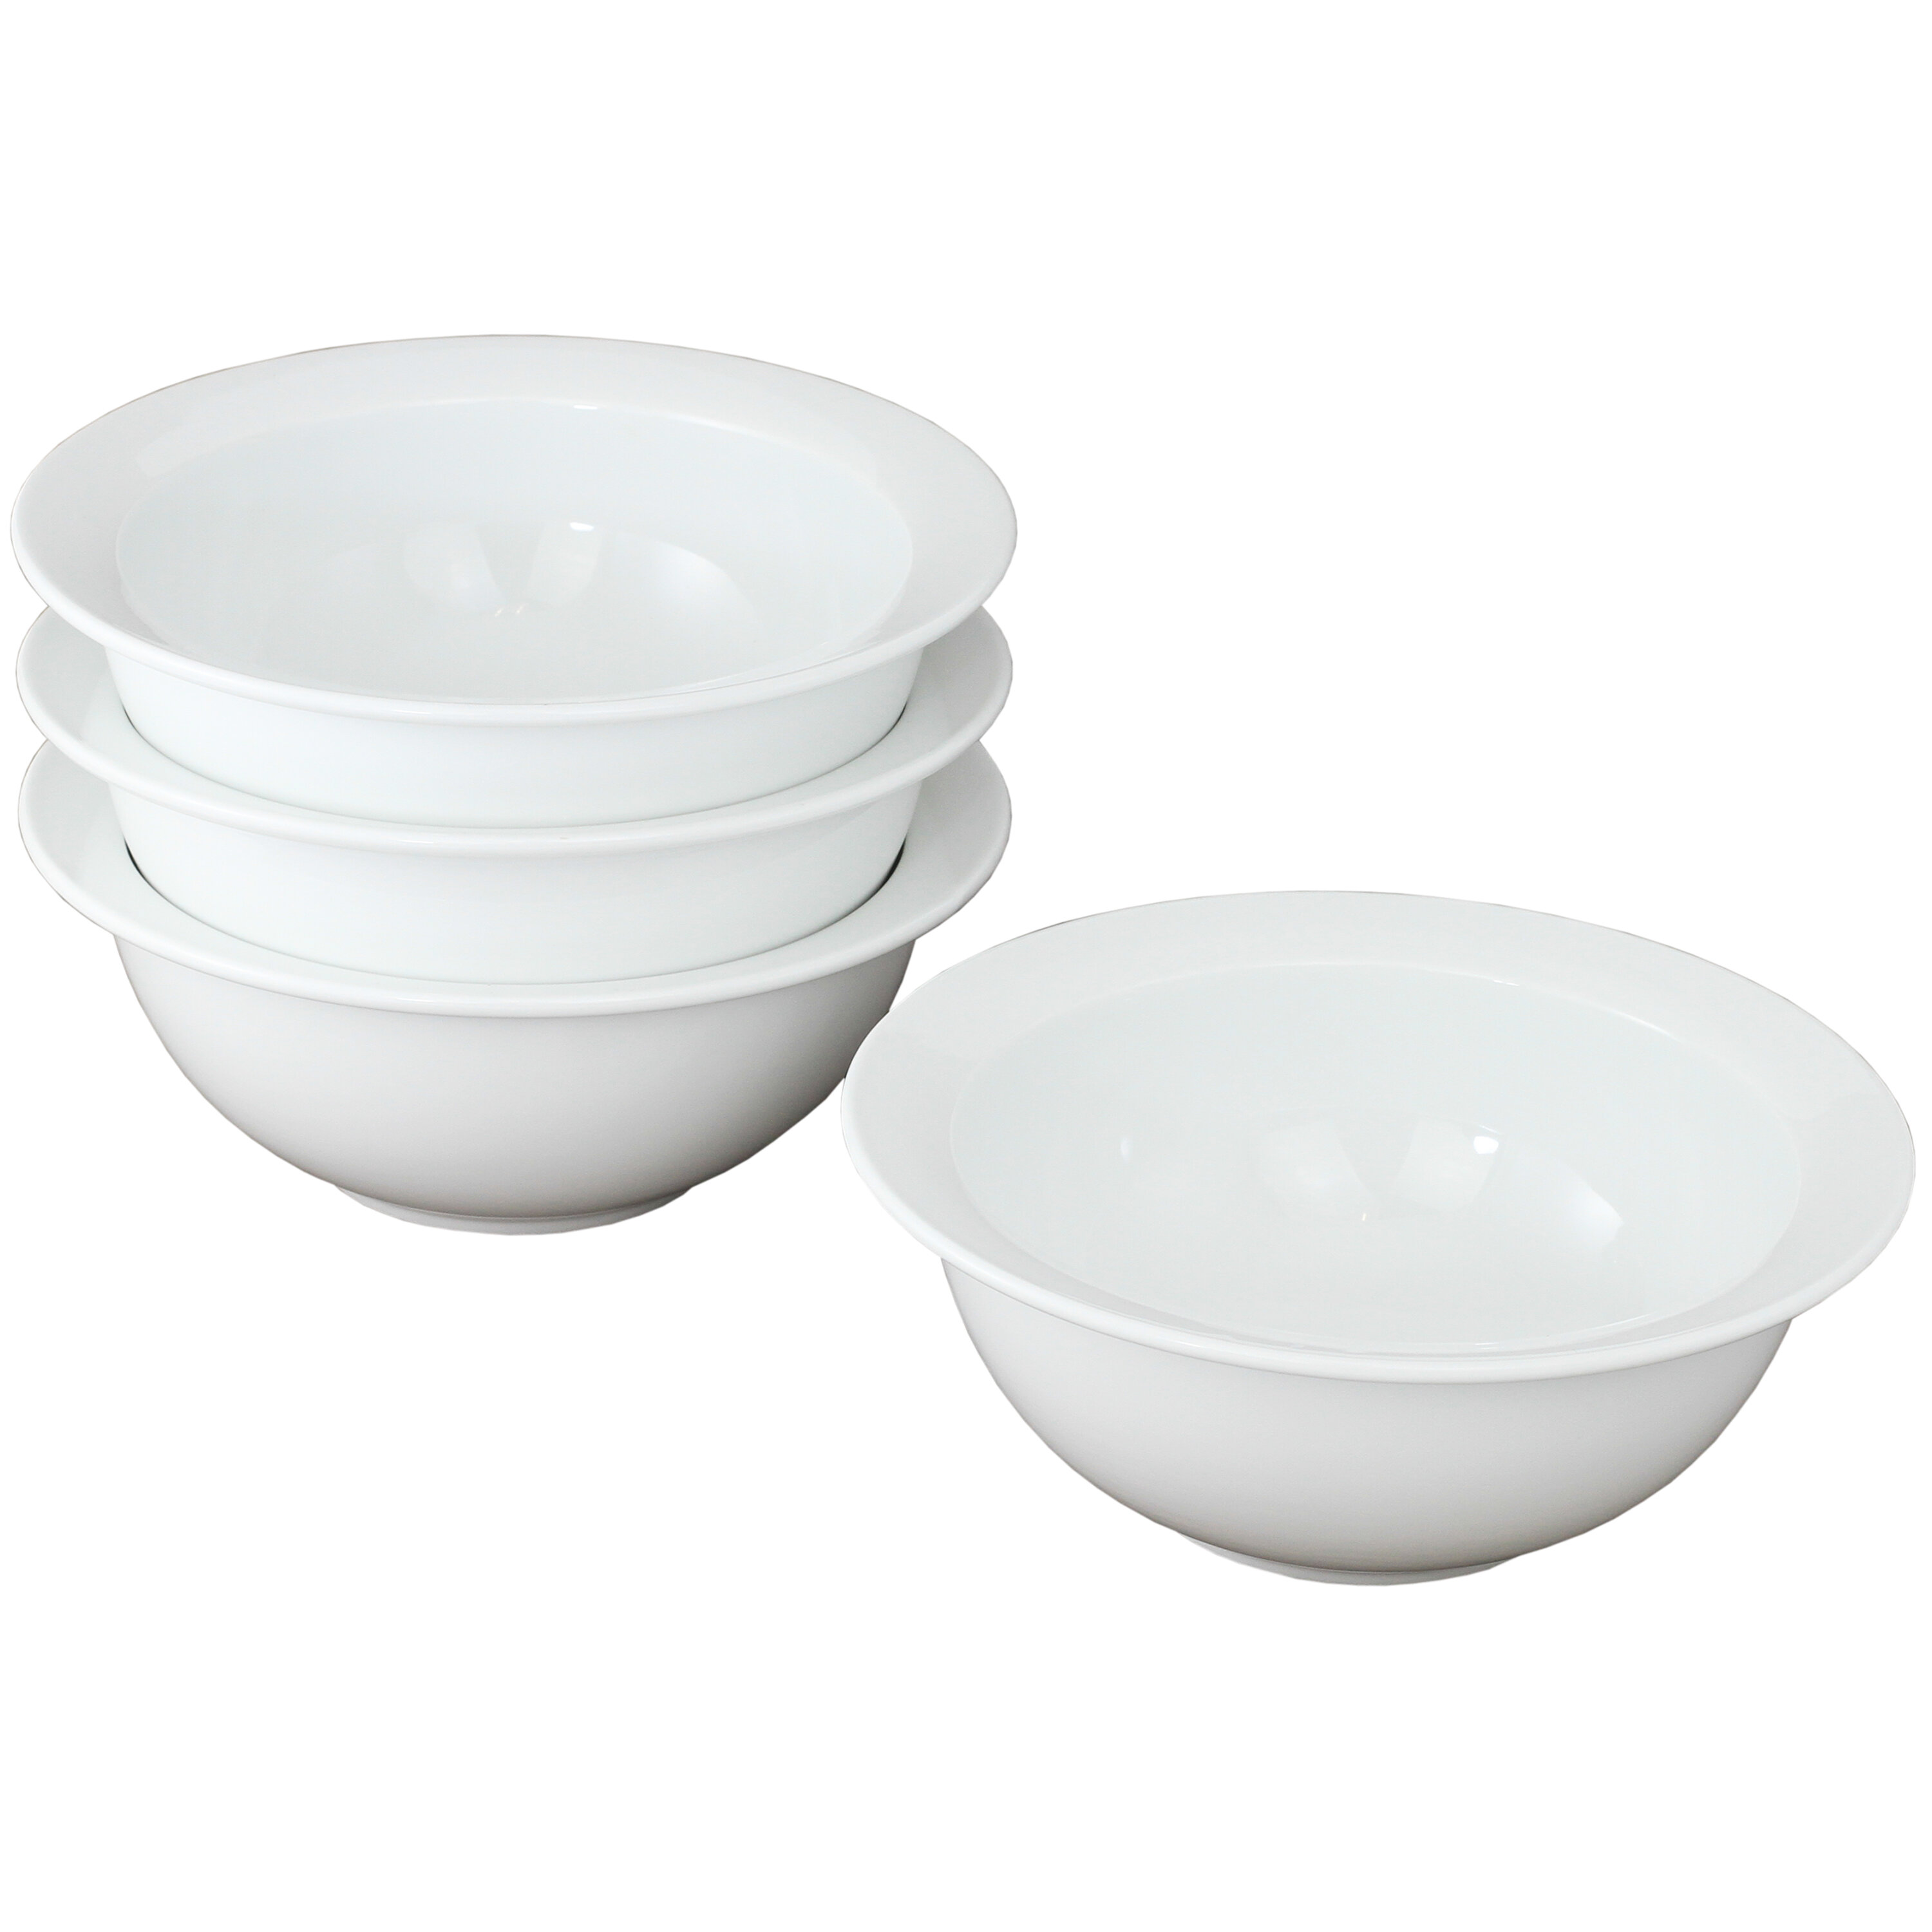 Unbreakable Large Cereal Bowls Set of 6, 32 Ounce BPA-Free Microwave and Dishwasher Safe Salad Bowls, Stackable Color Kitchen Bowls for Serving